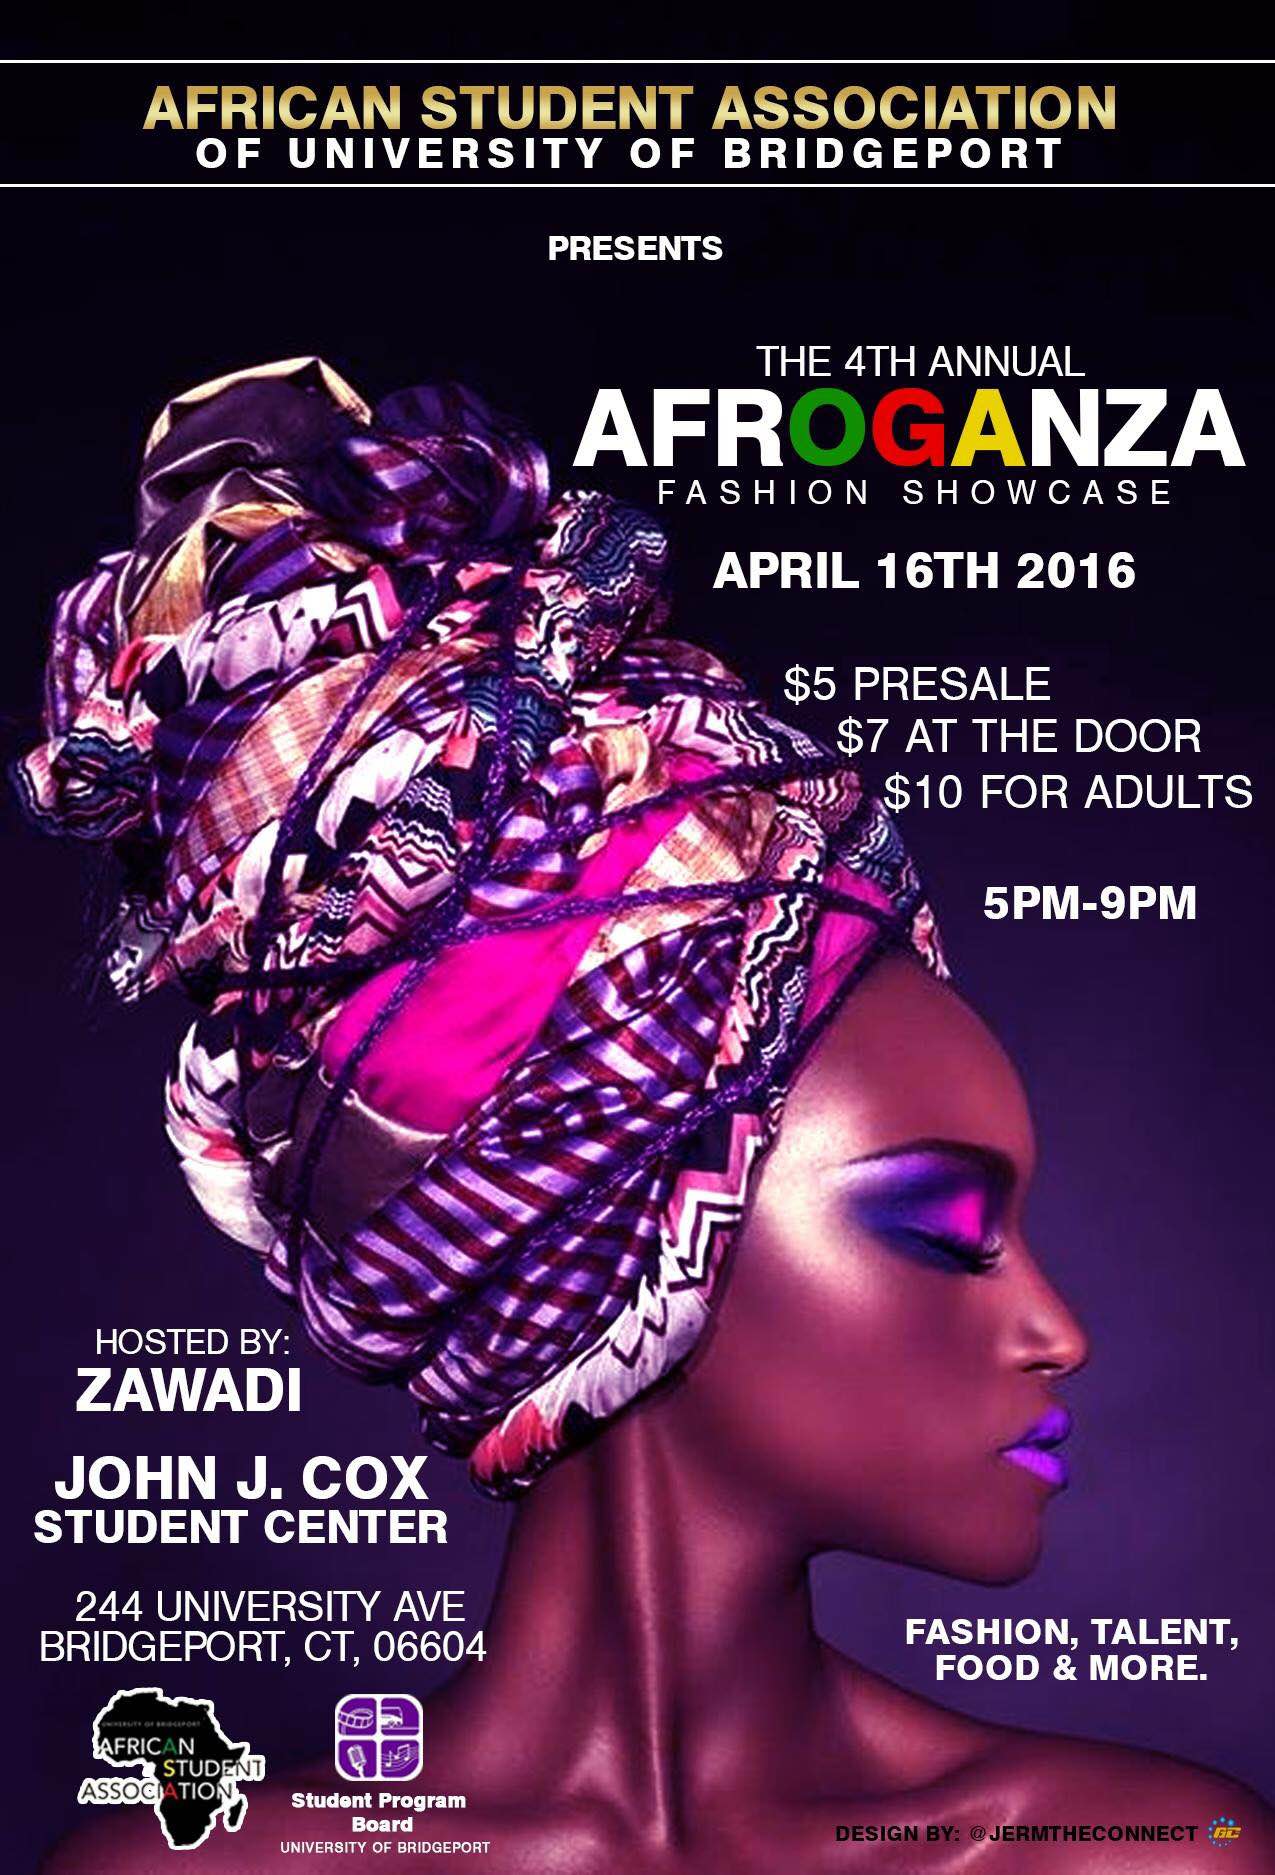 University of Bridgeport ASA Presents The 4th Annual Afroganza Fashion Showcase 2016